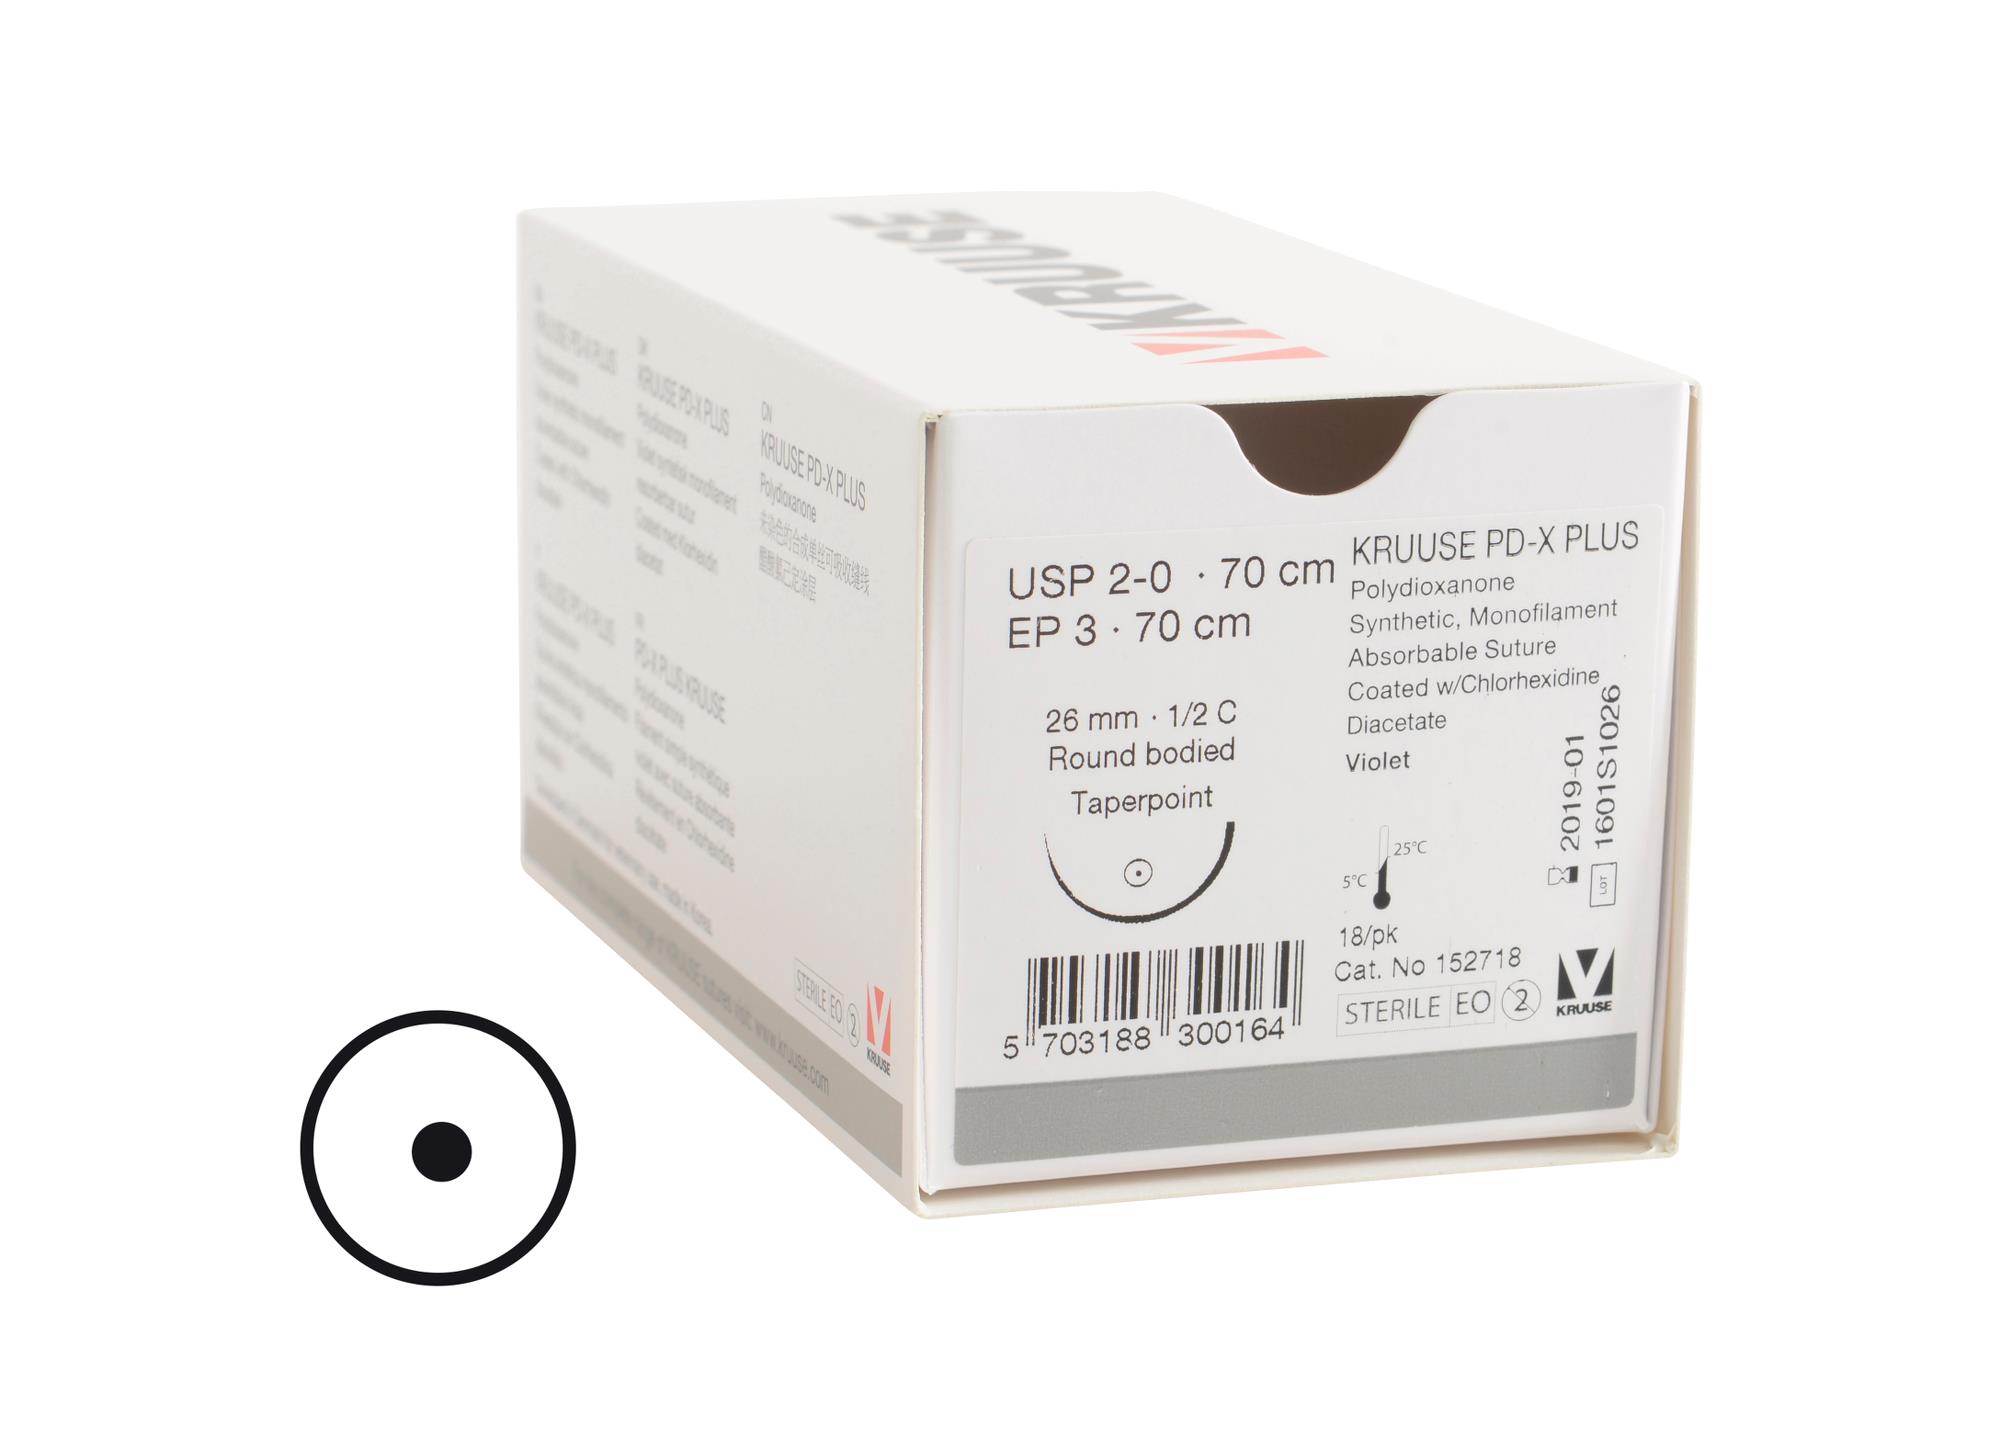 KRUUSE PD-X Plus suture, USP 2-0, 70 cm, 26 mm needle, ½ C, RB, taperpoint, 18/pk